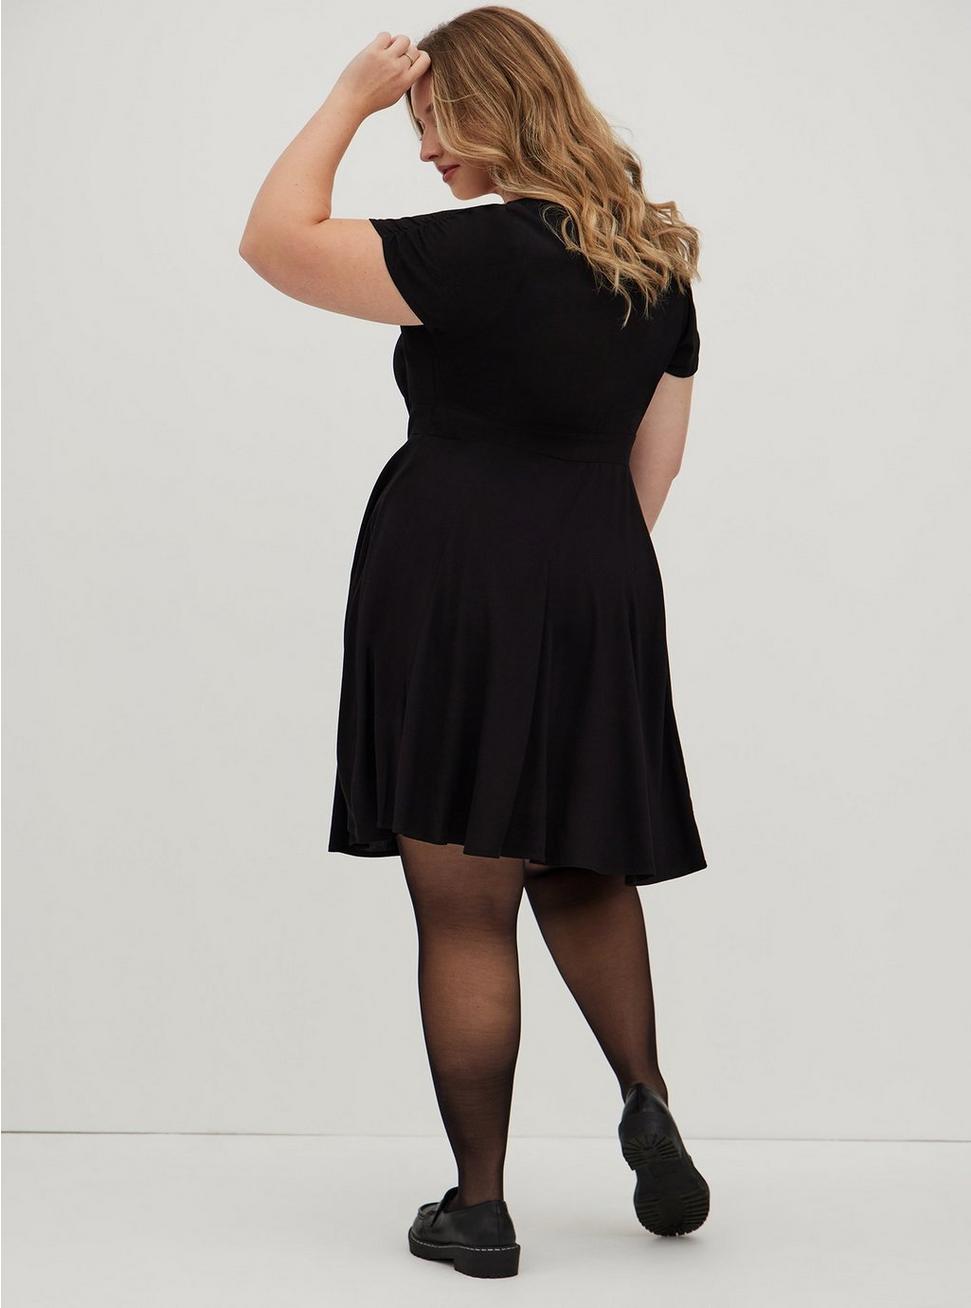 Plus Size - Embroidered Skater Dress - Stretch Challis Black - Torrid